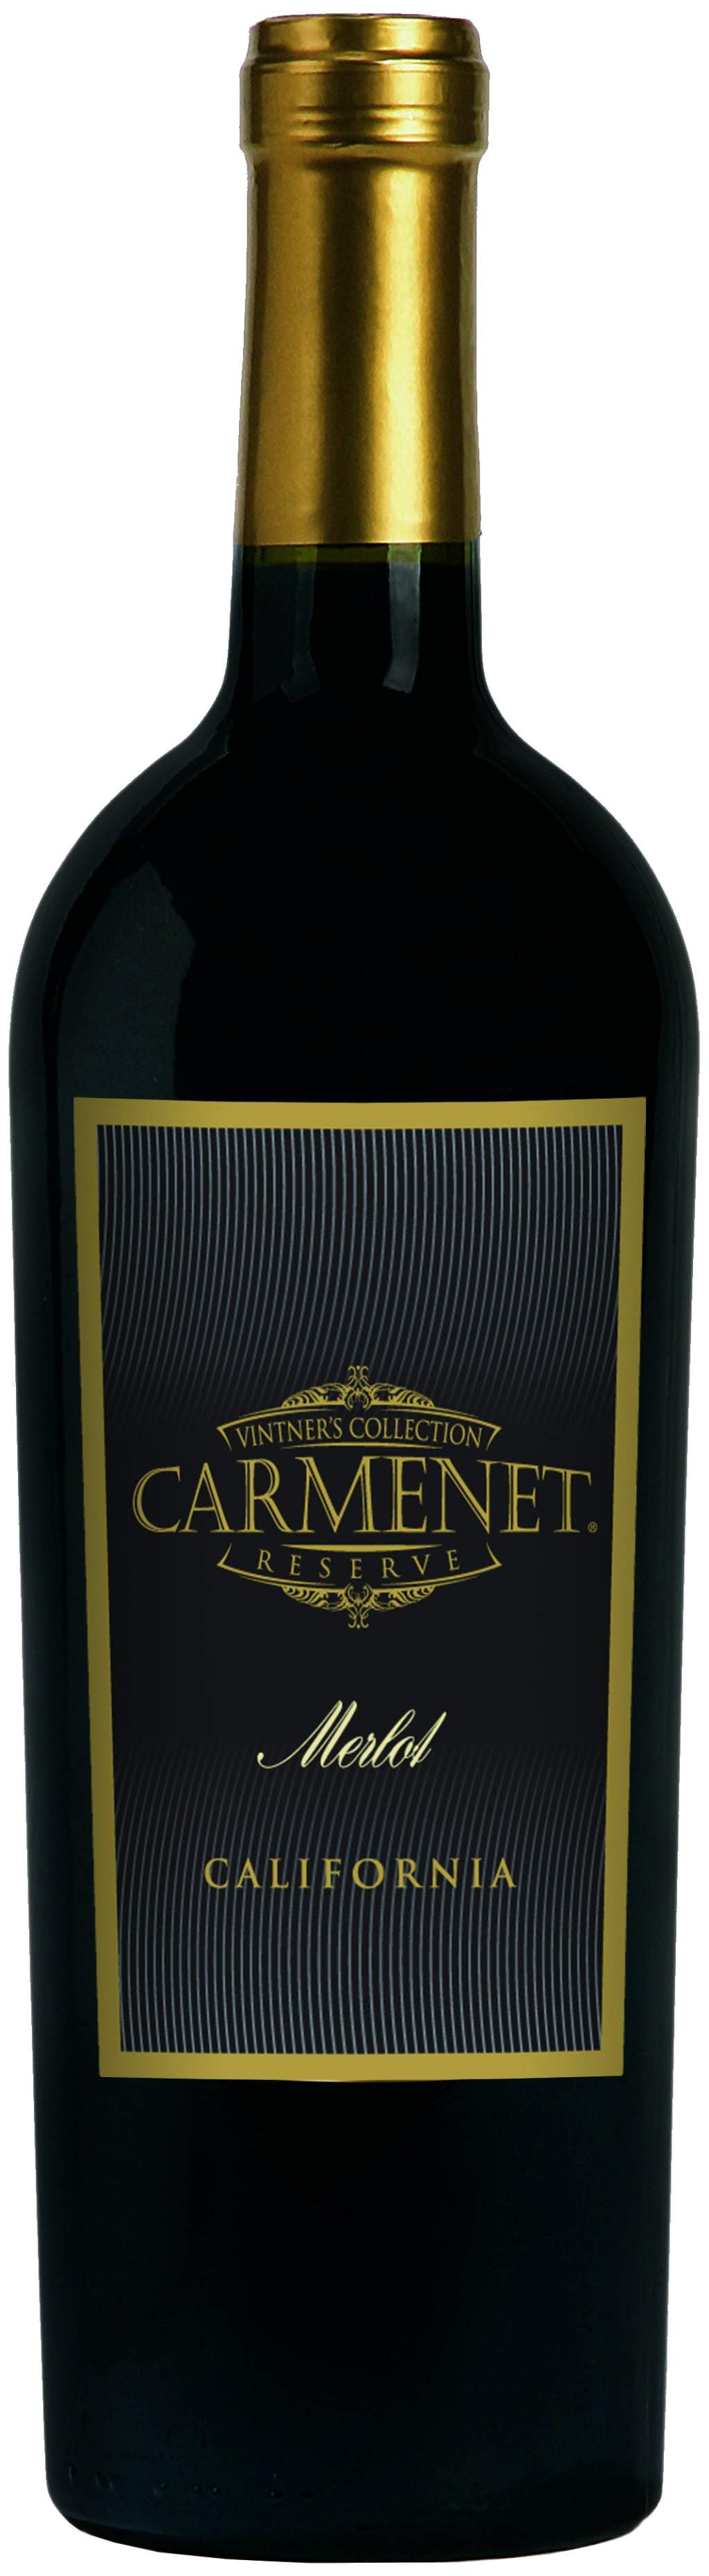 Carmenet Merlot 2015